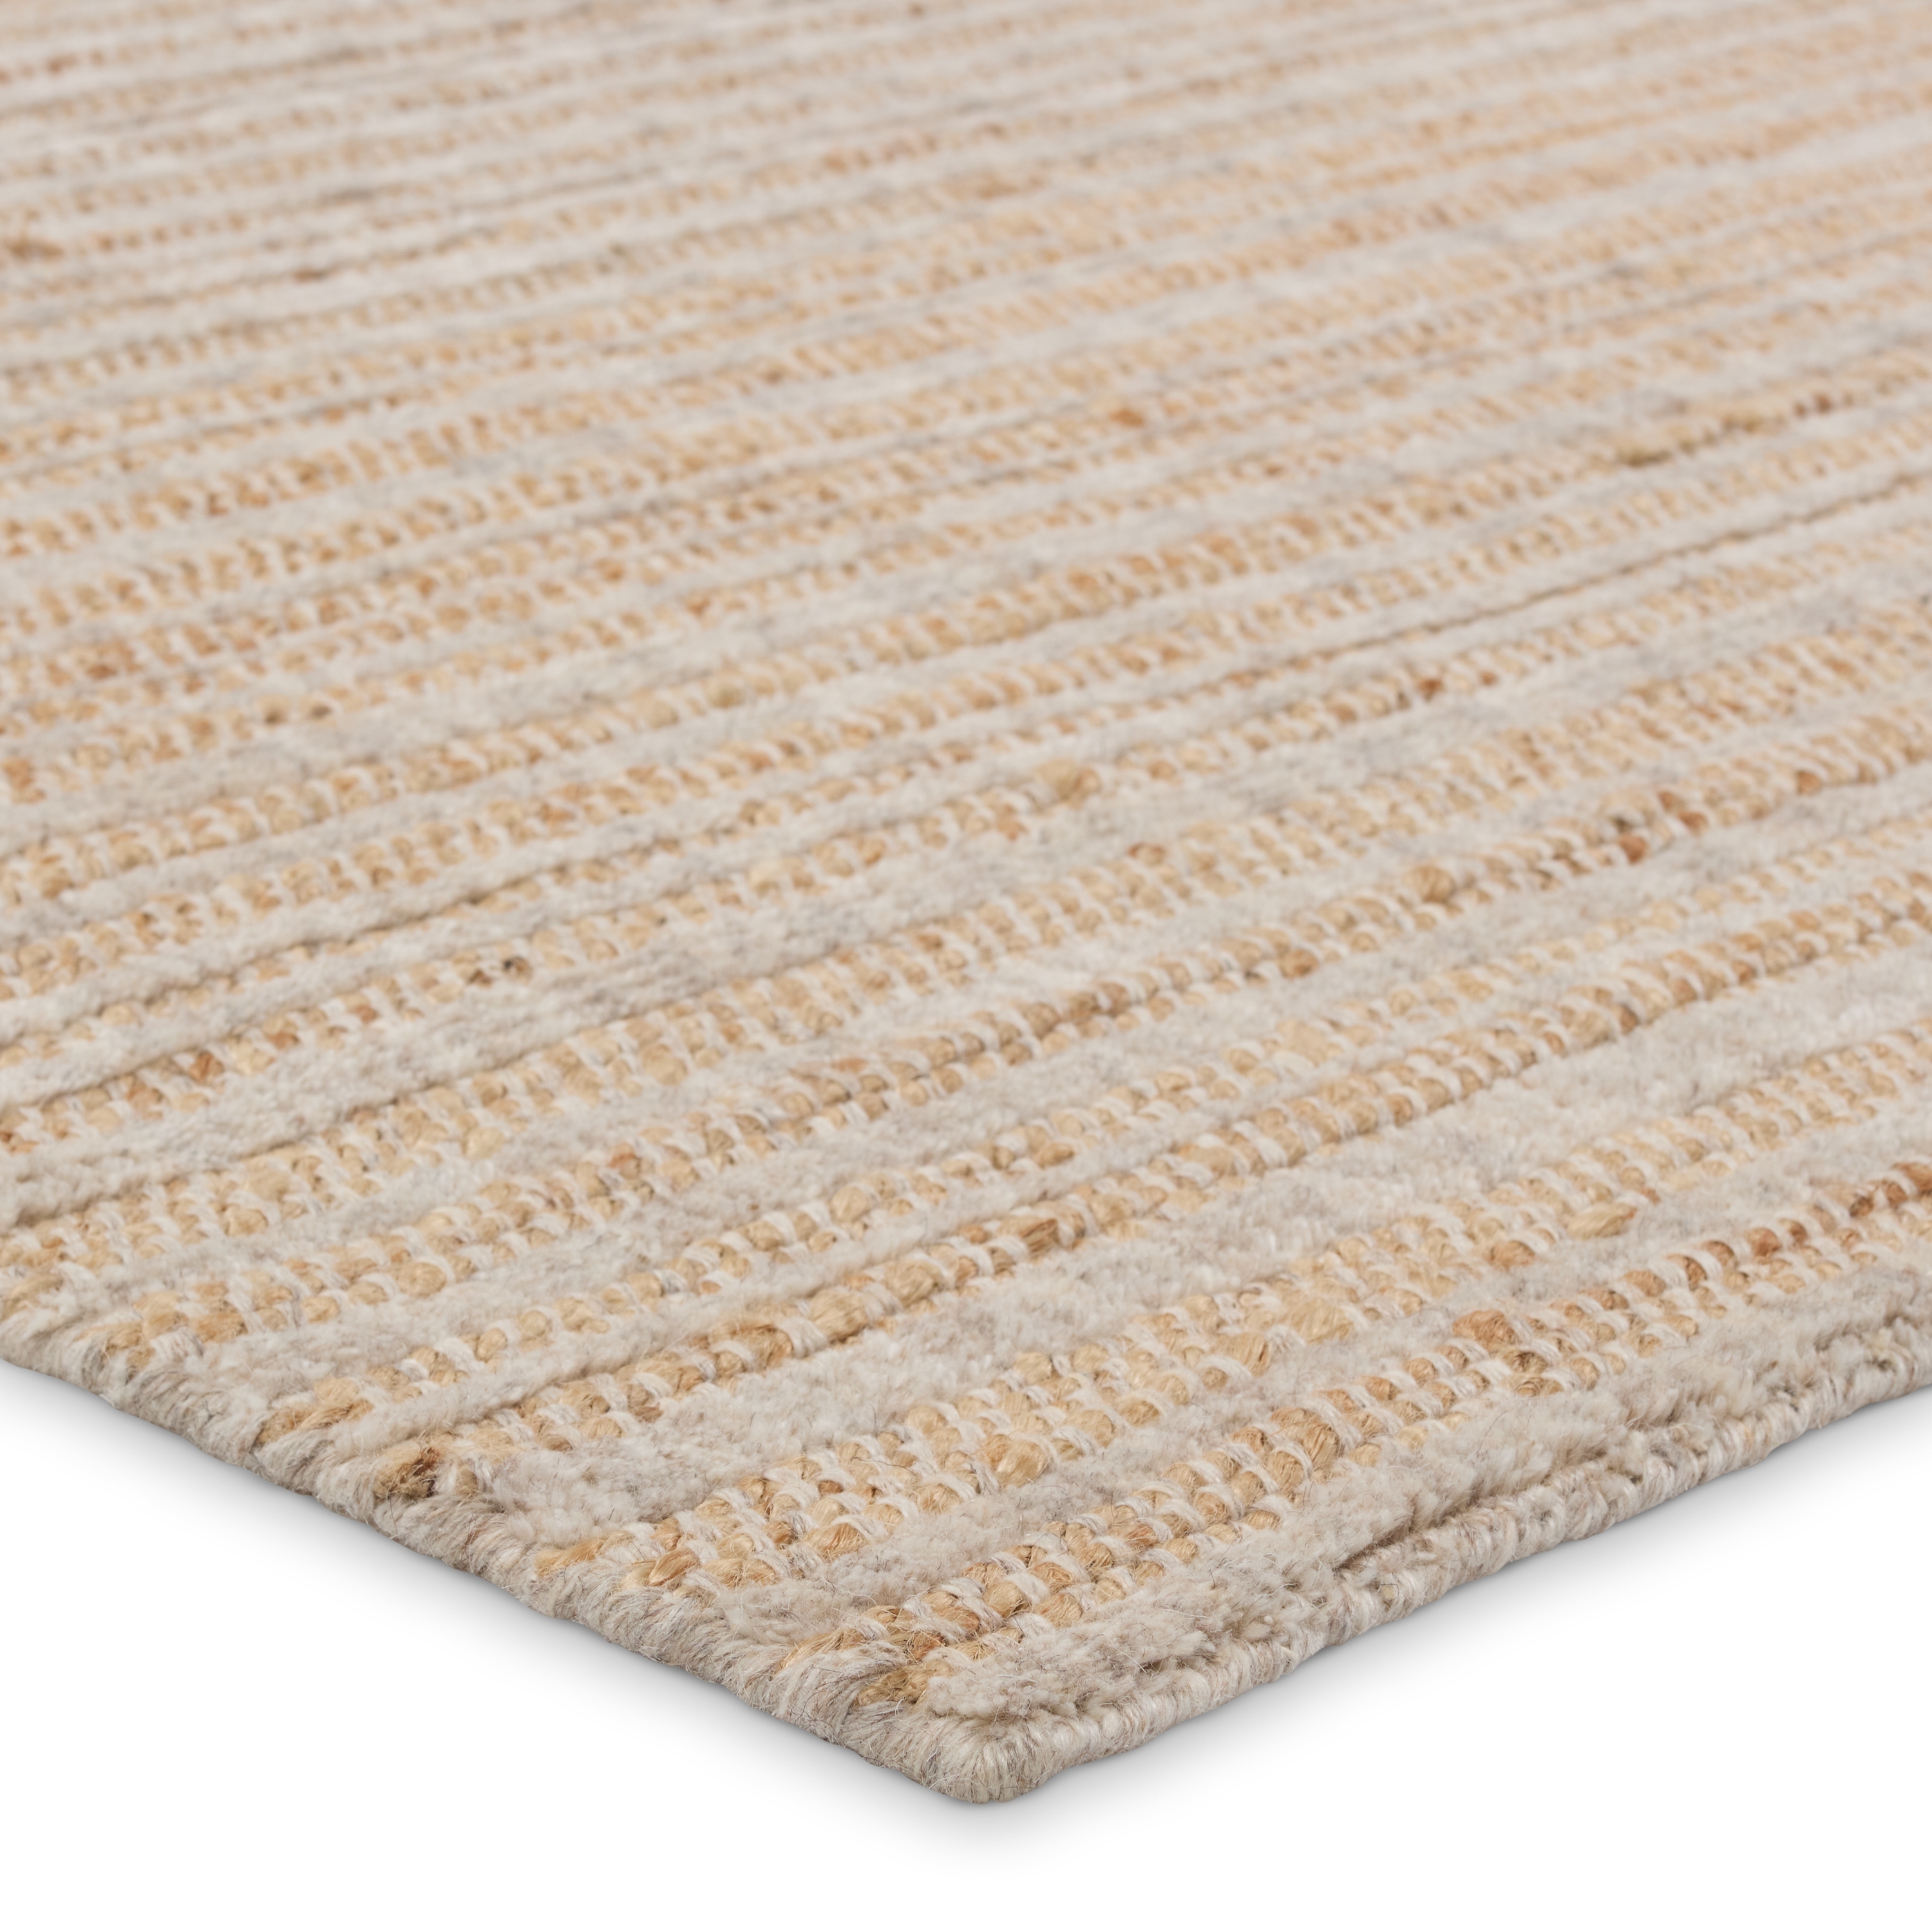 Abdar Handmade Striped Tan/ Gray Area Rug (10'X14') - Image 1